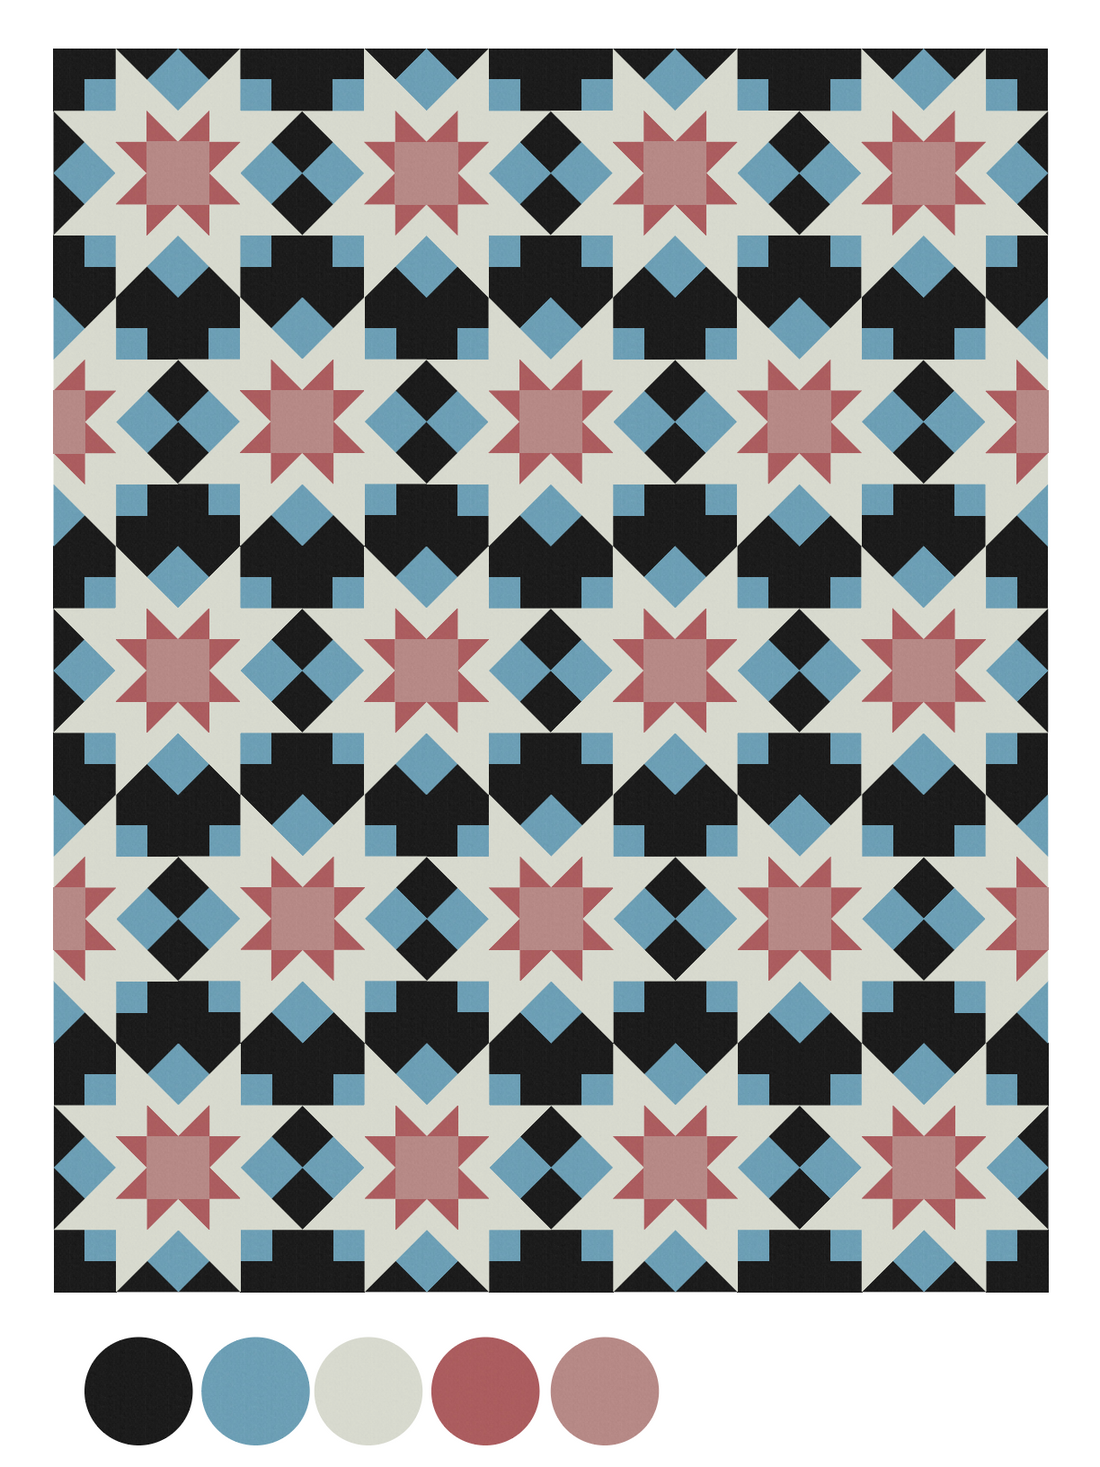 Night Stars quilt pattern